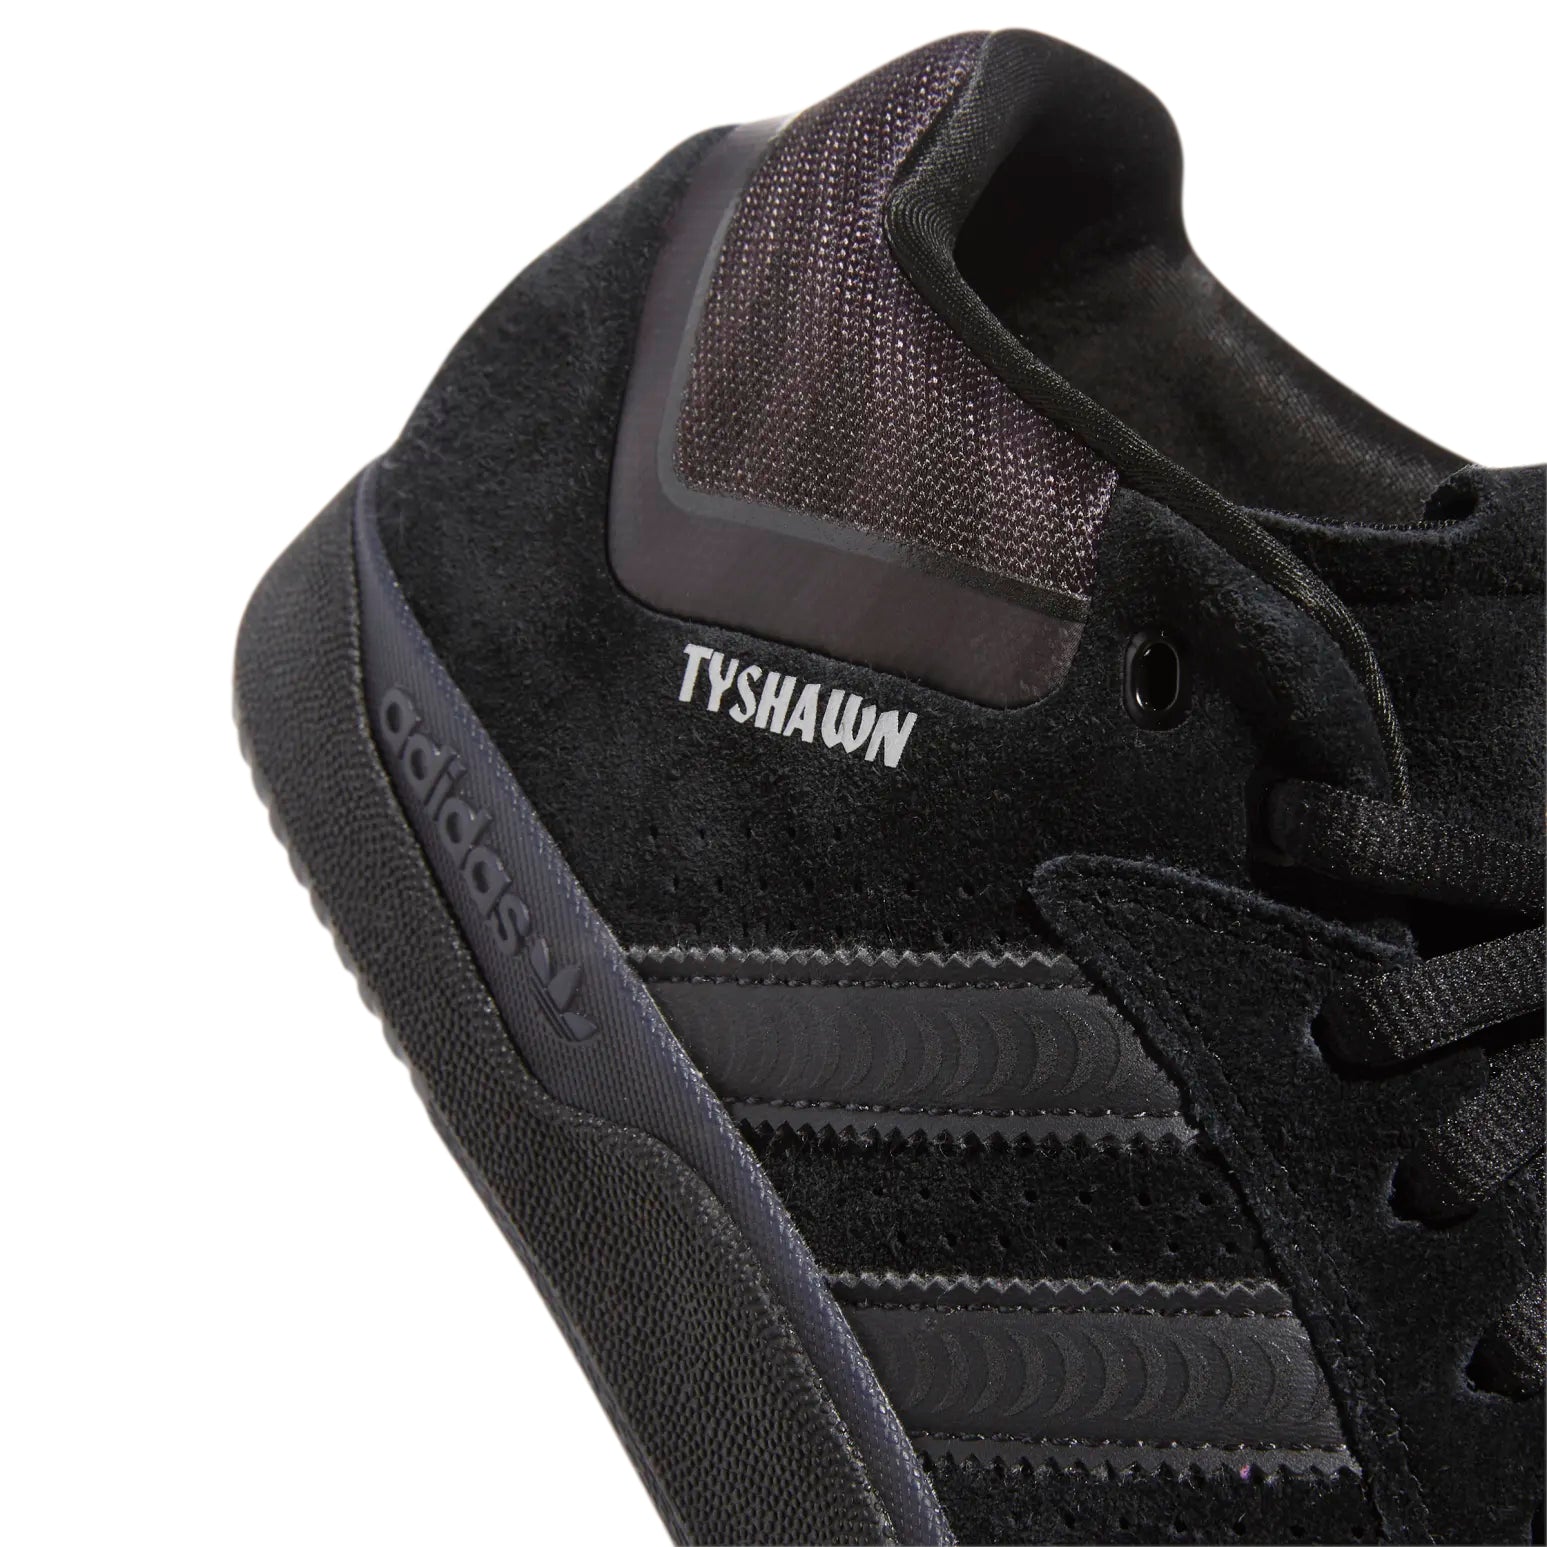 Core Black Spitfire x Tyshawn Adidas Skateboarding Shoe Detail